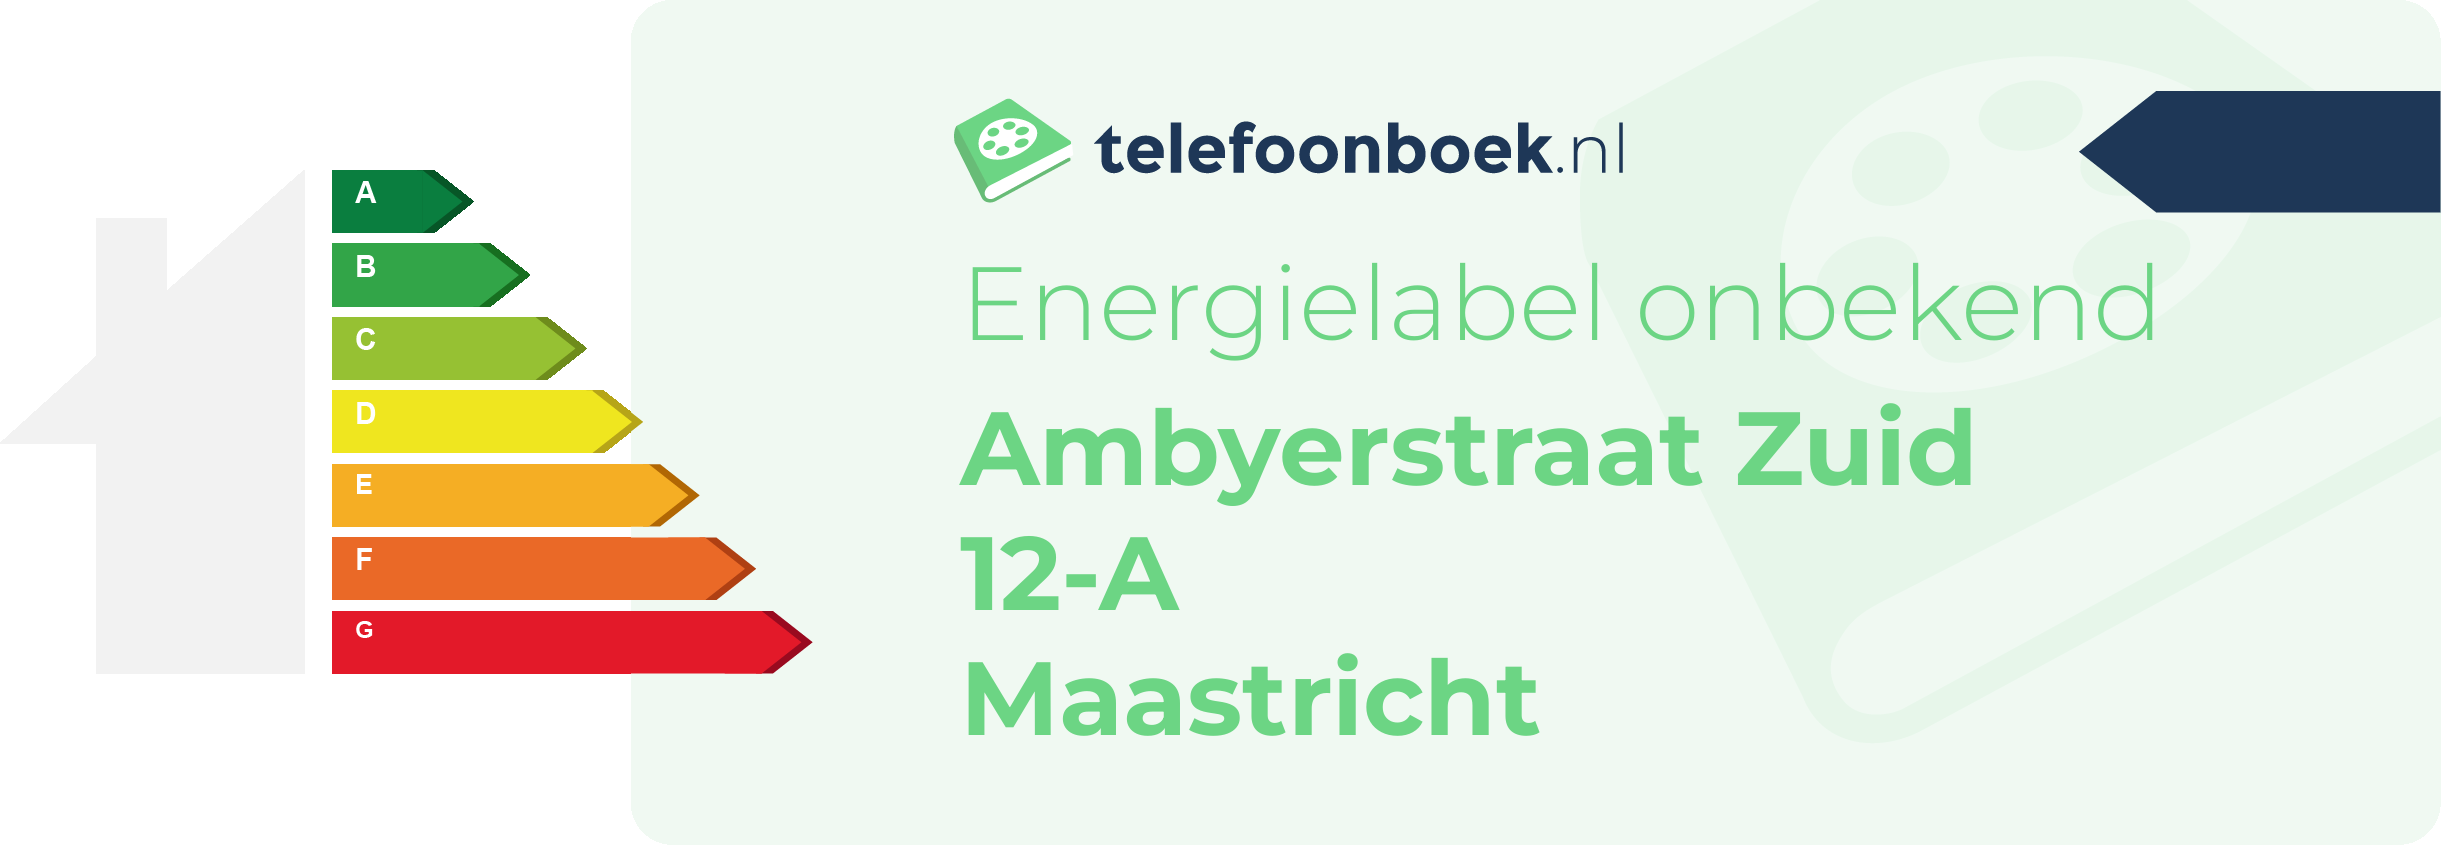 Energielabel Ambyerstraat Zuid 12-A Maastricht